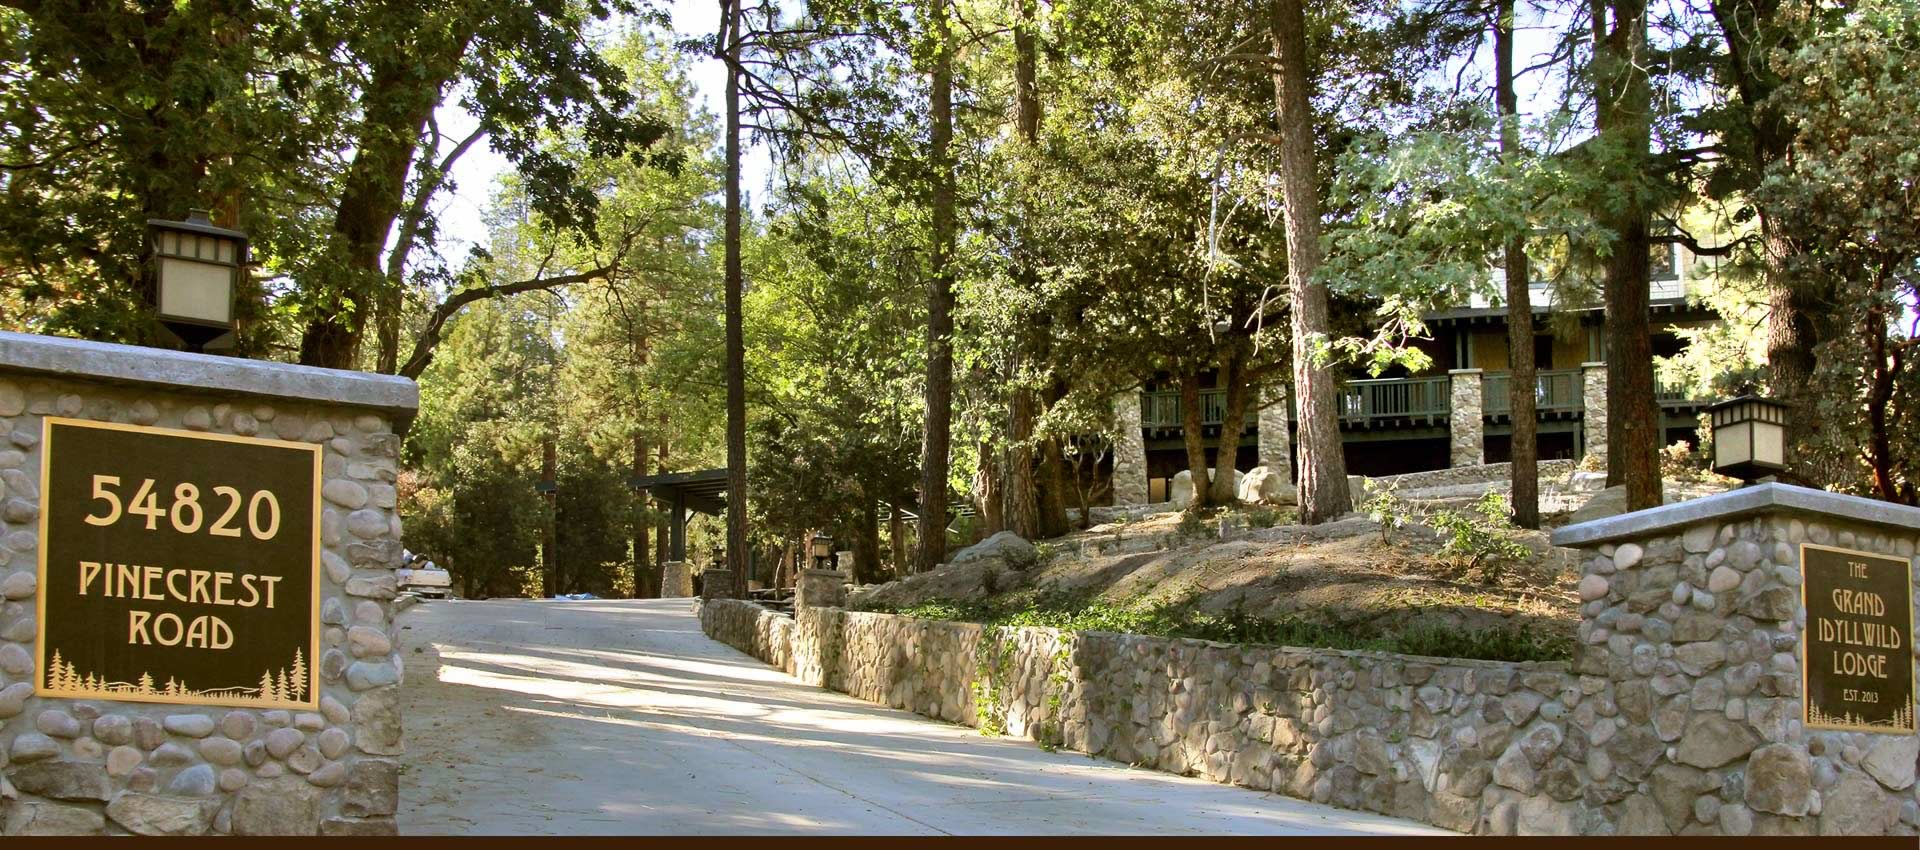 The Grand Idyllwild Lodge diveway entrance